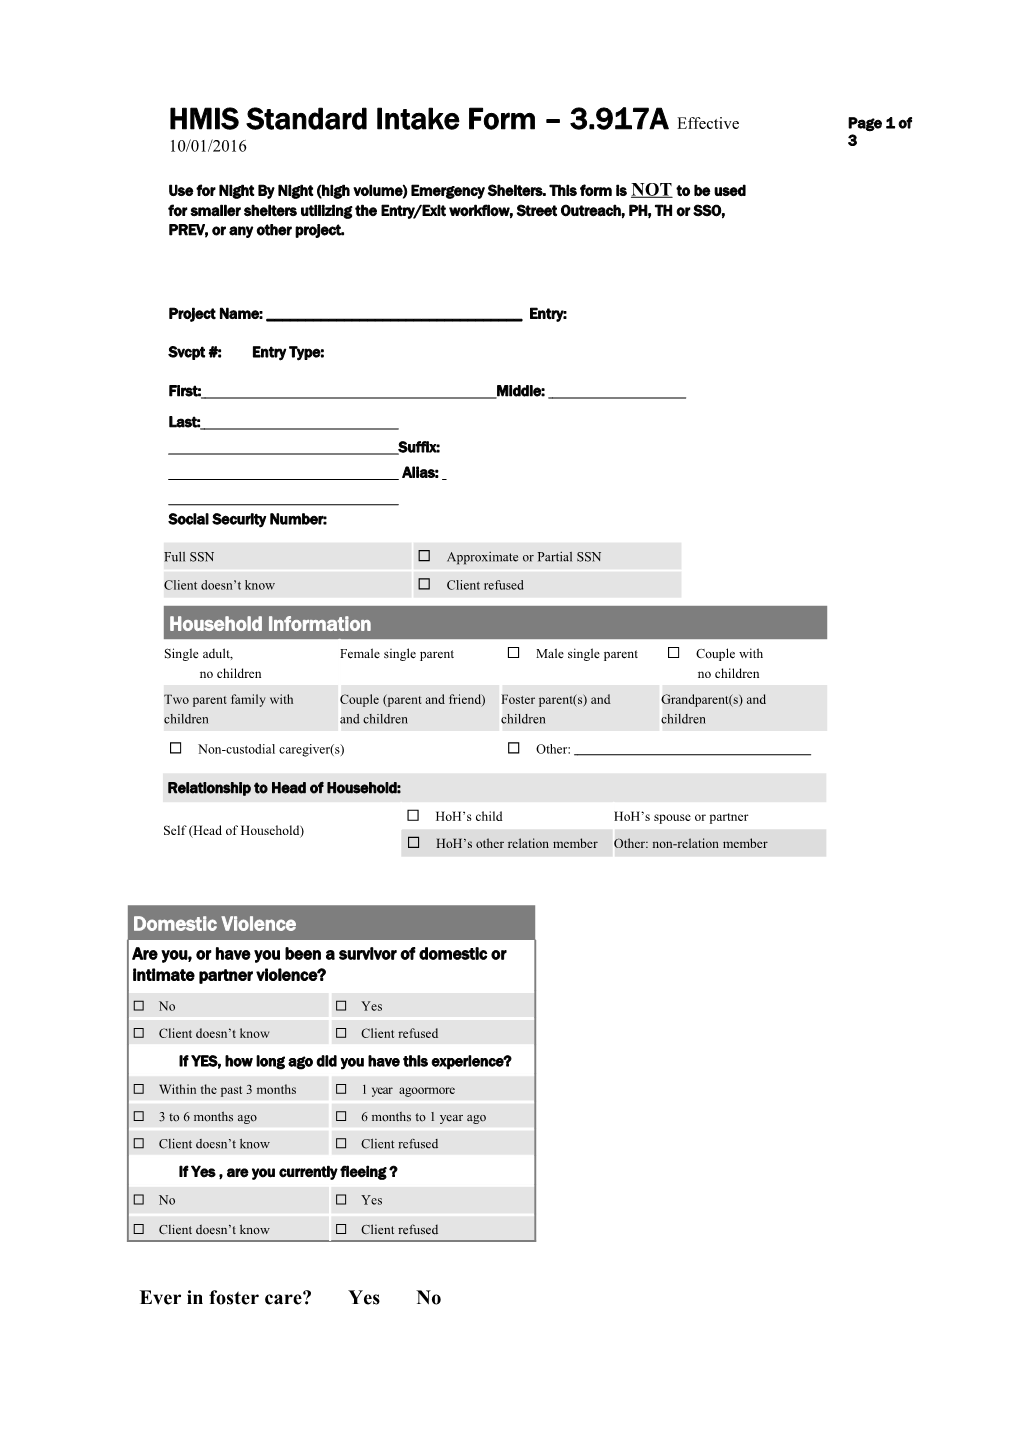 HMIS Standard Intake Form 3.917A Effective 10/01/2016